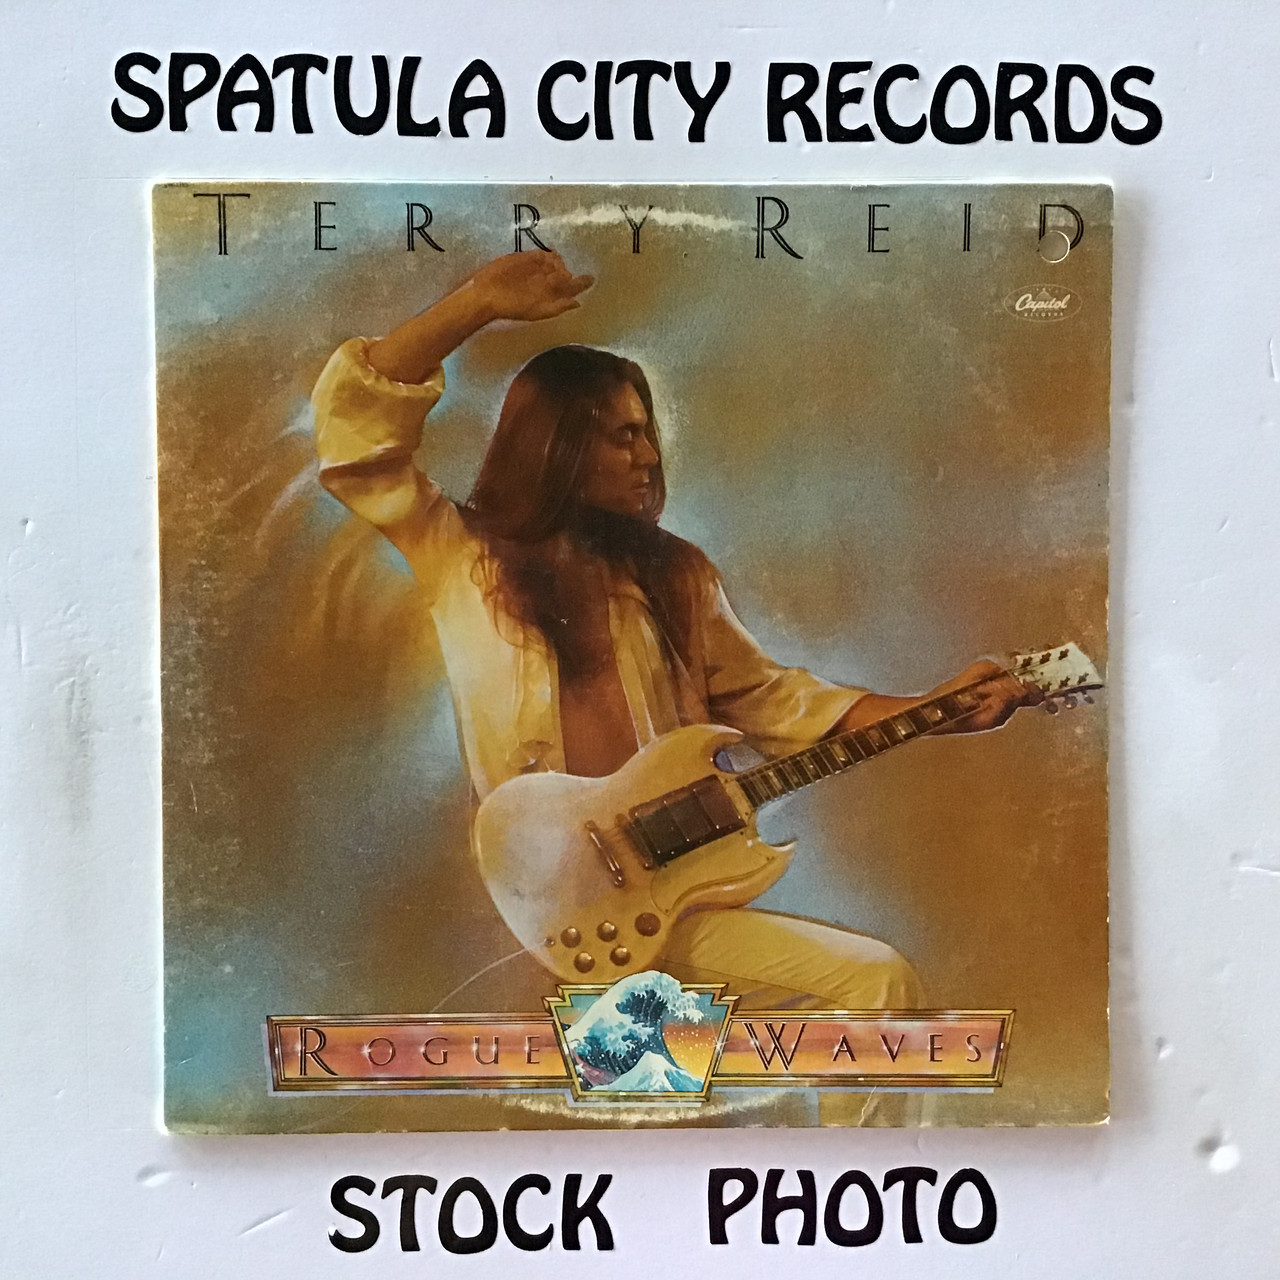 Terry Reid - Rogue Waves - vinyl record LP